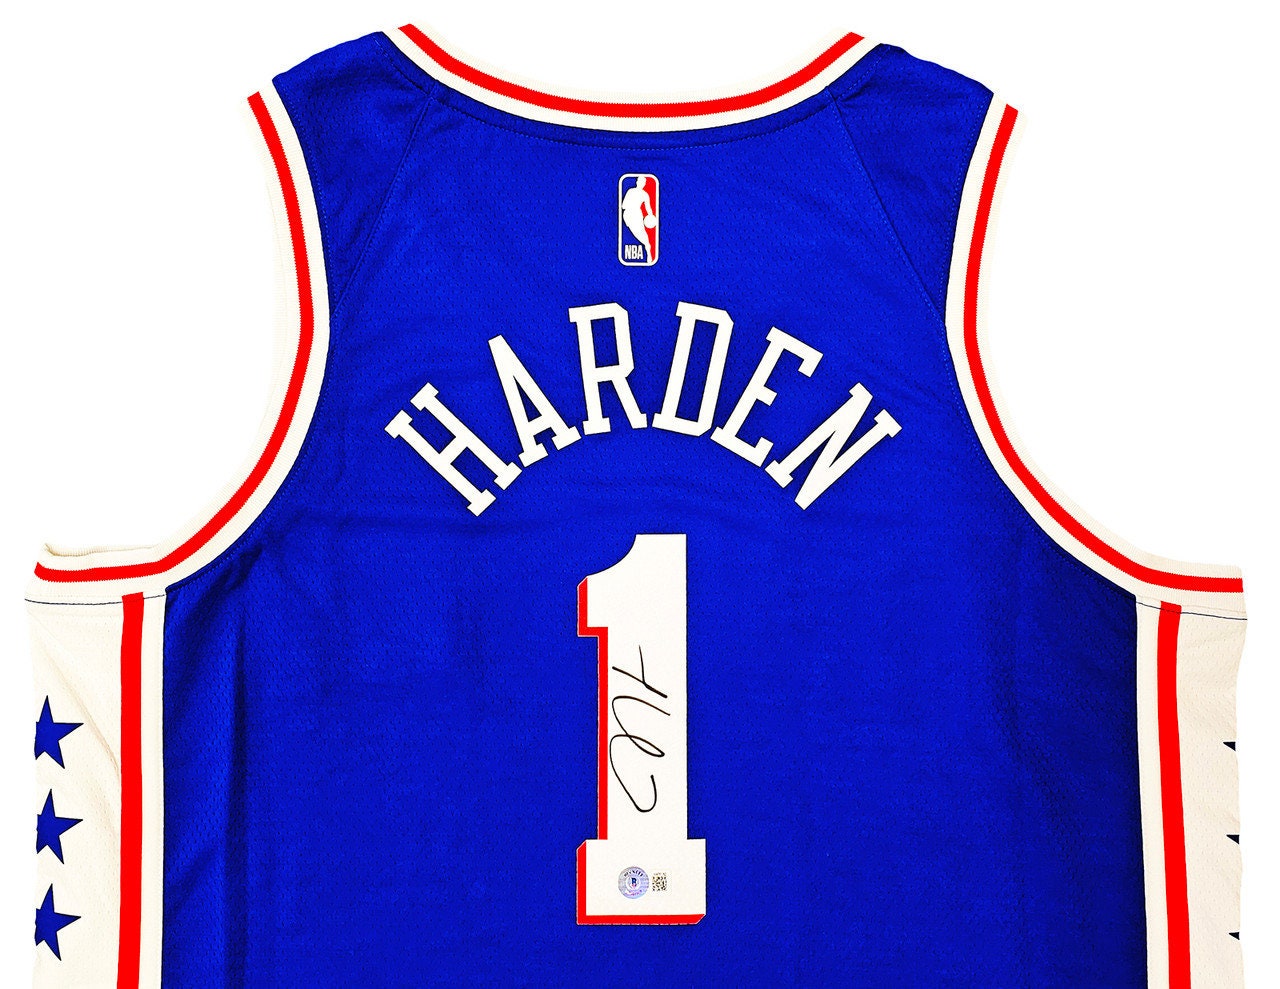 Hardn Jersey Sublimation Basketball Jersey Design Digital 